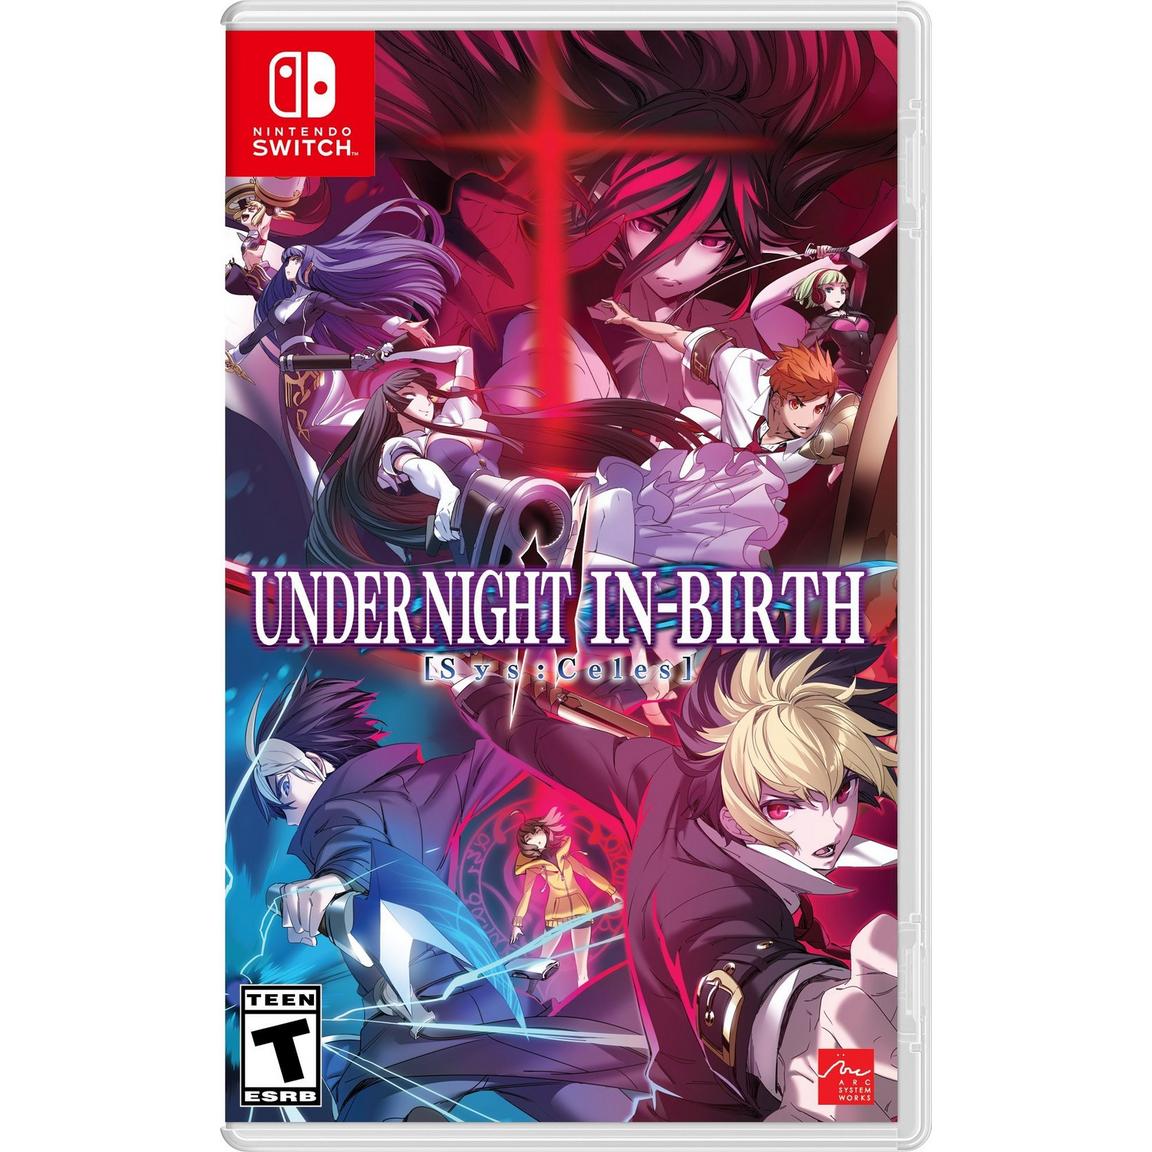 цена Видеоигра UNDER NIGHT IN-BIRTH II [Sys:Celes] - Nintendo Switch